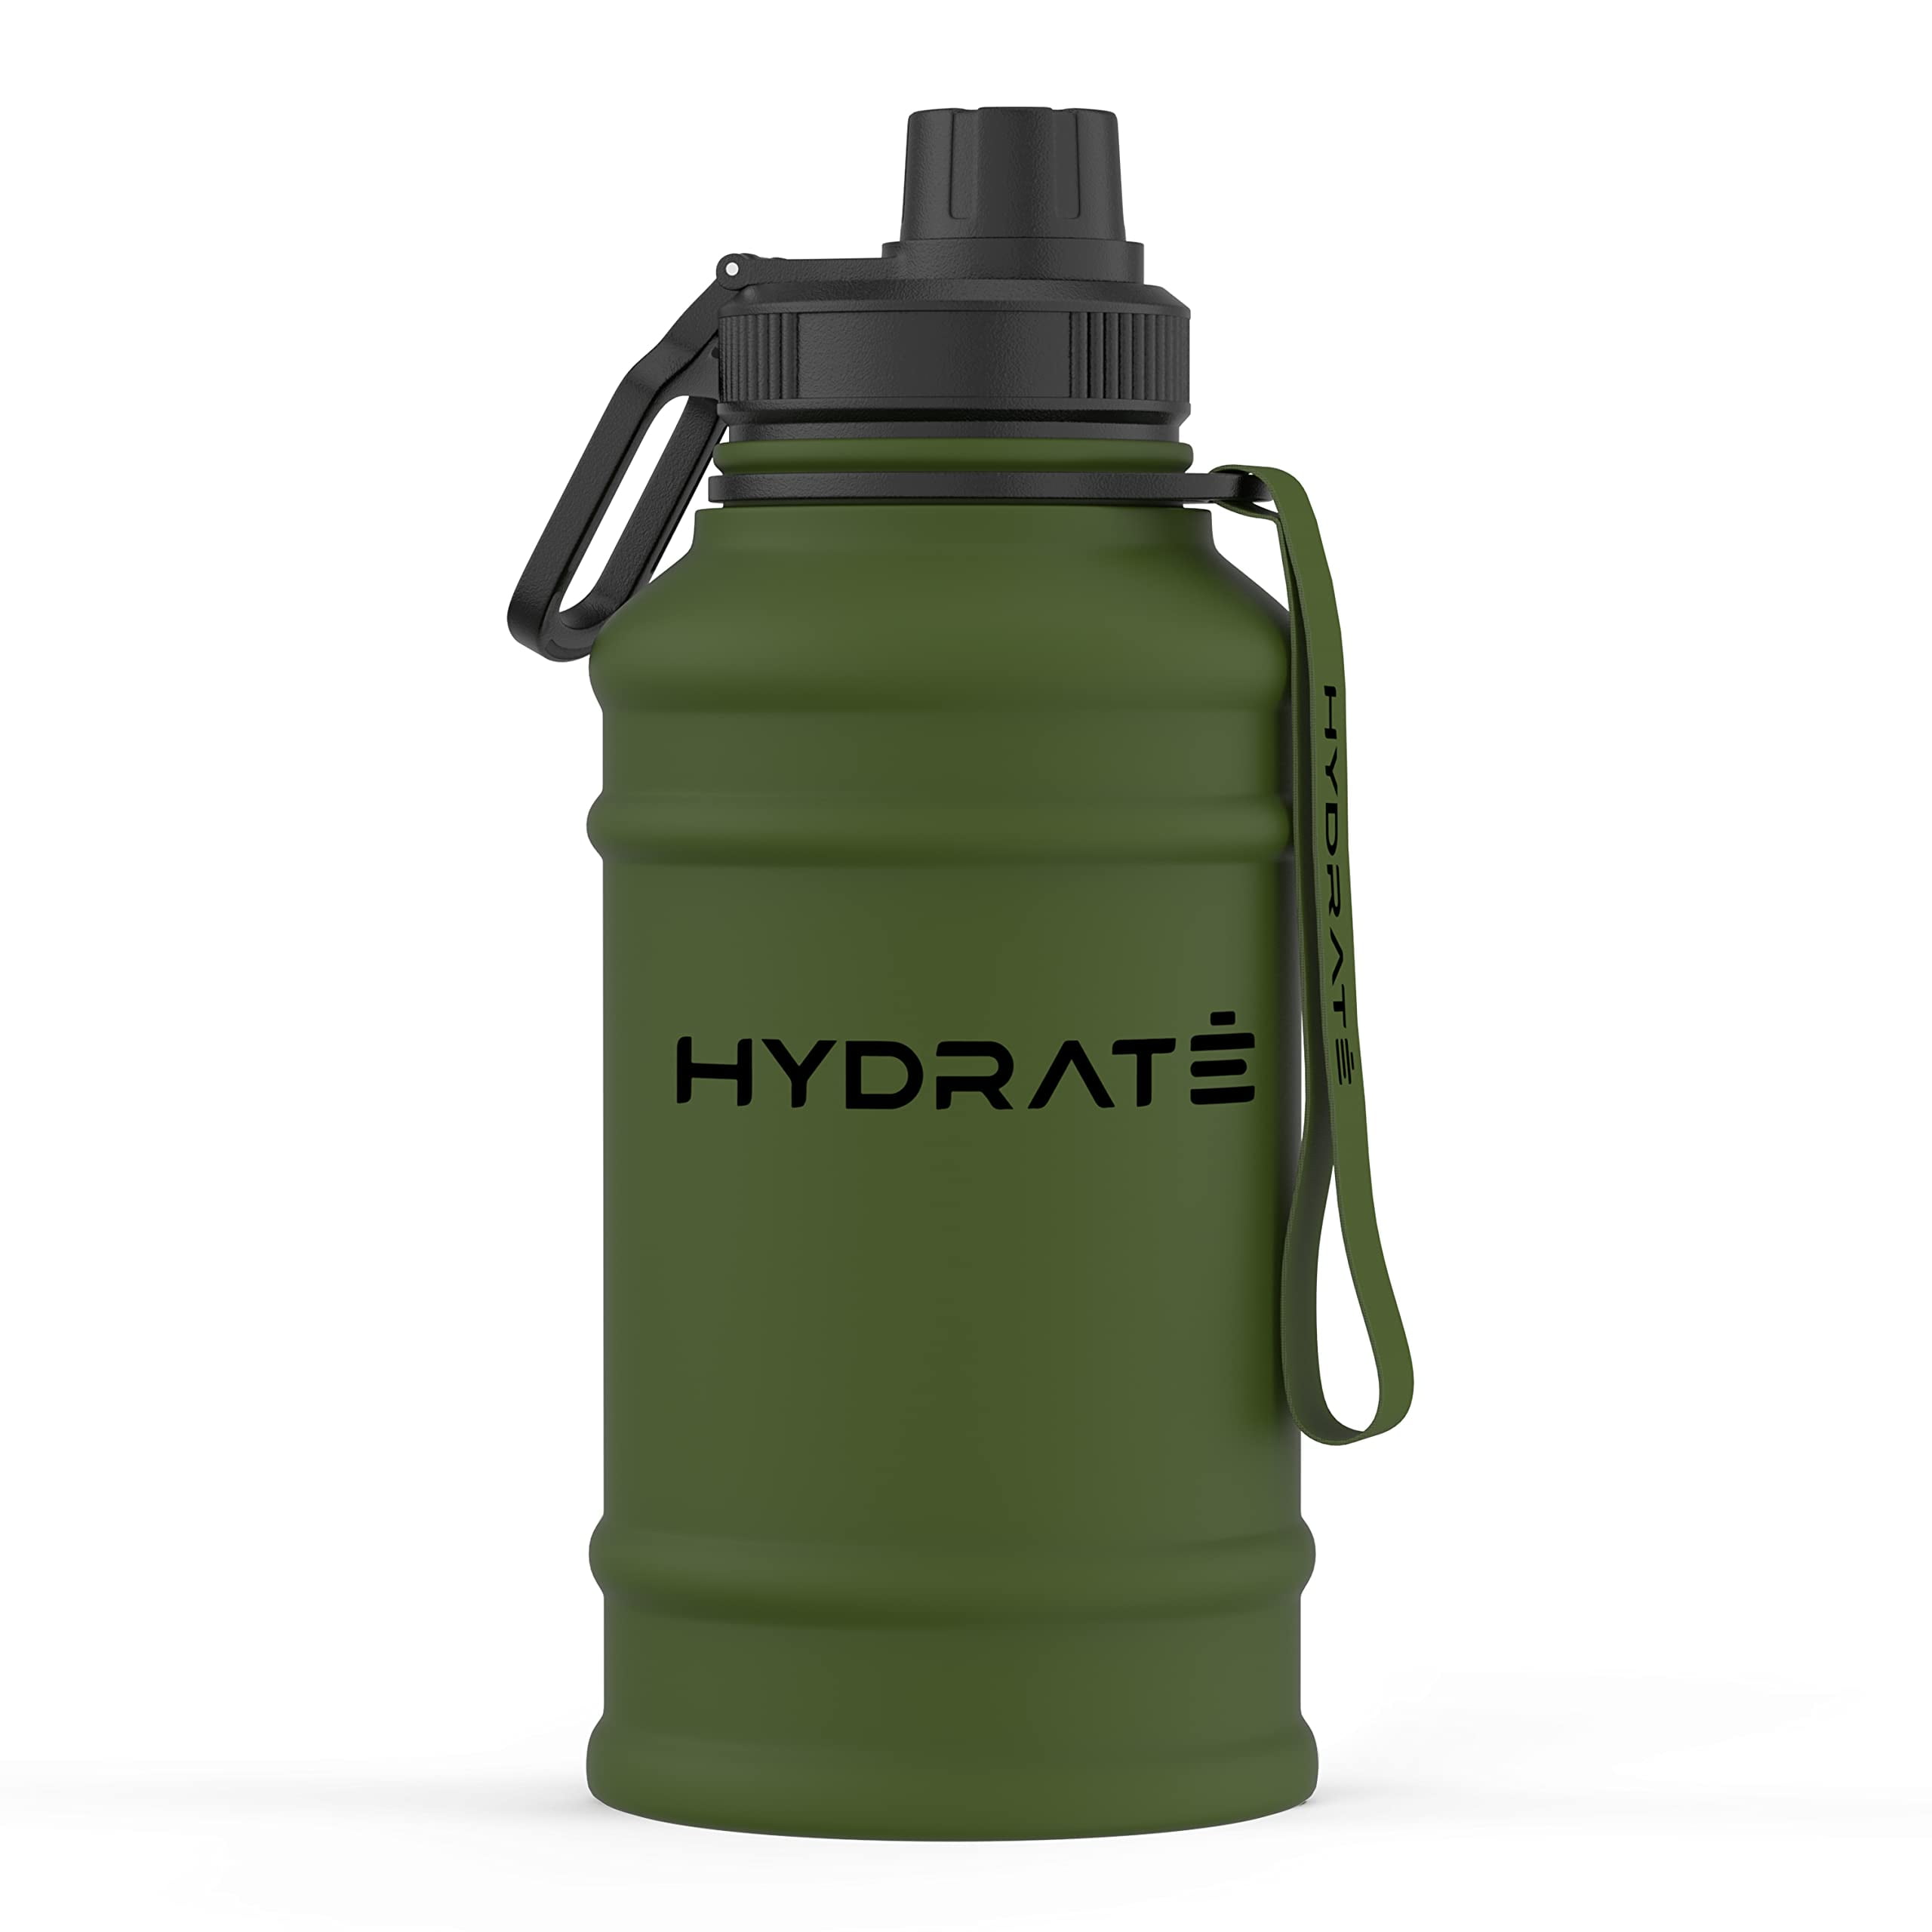 74 oz Stainless Steel Water Bottle - BPA Free Metal Water Bottle for Gym,, Green